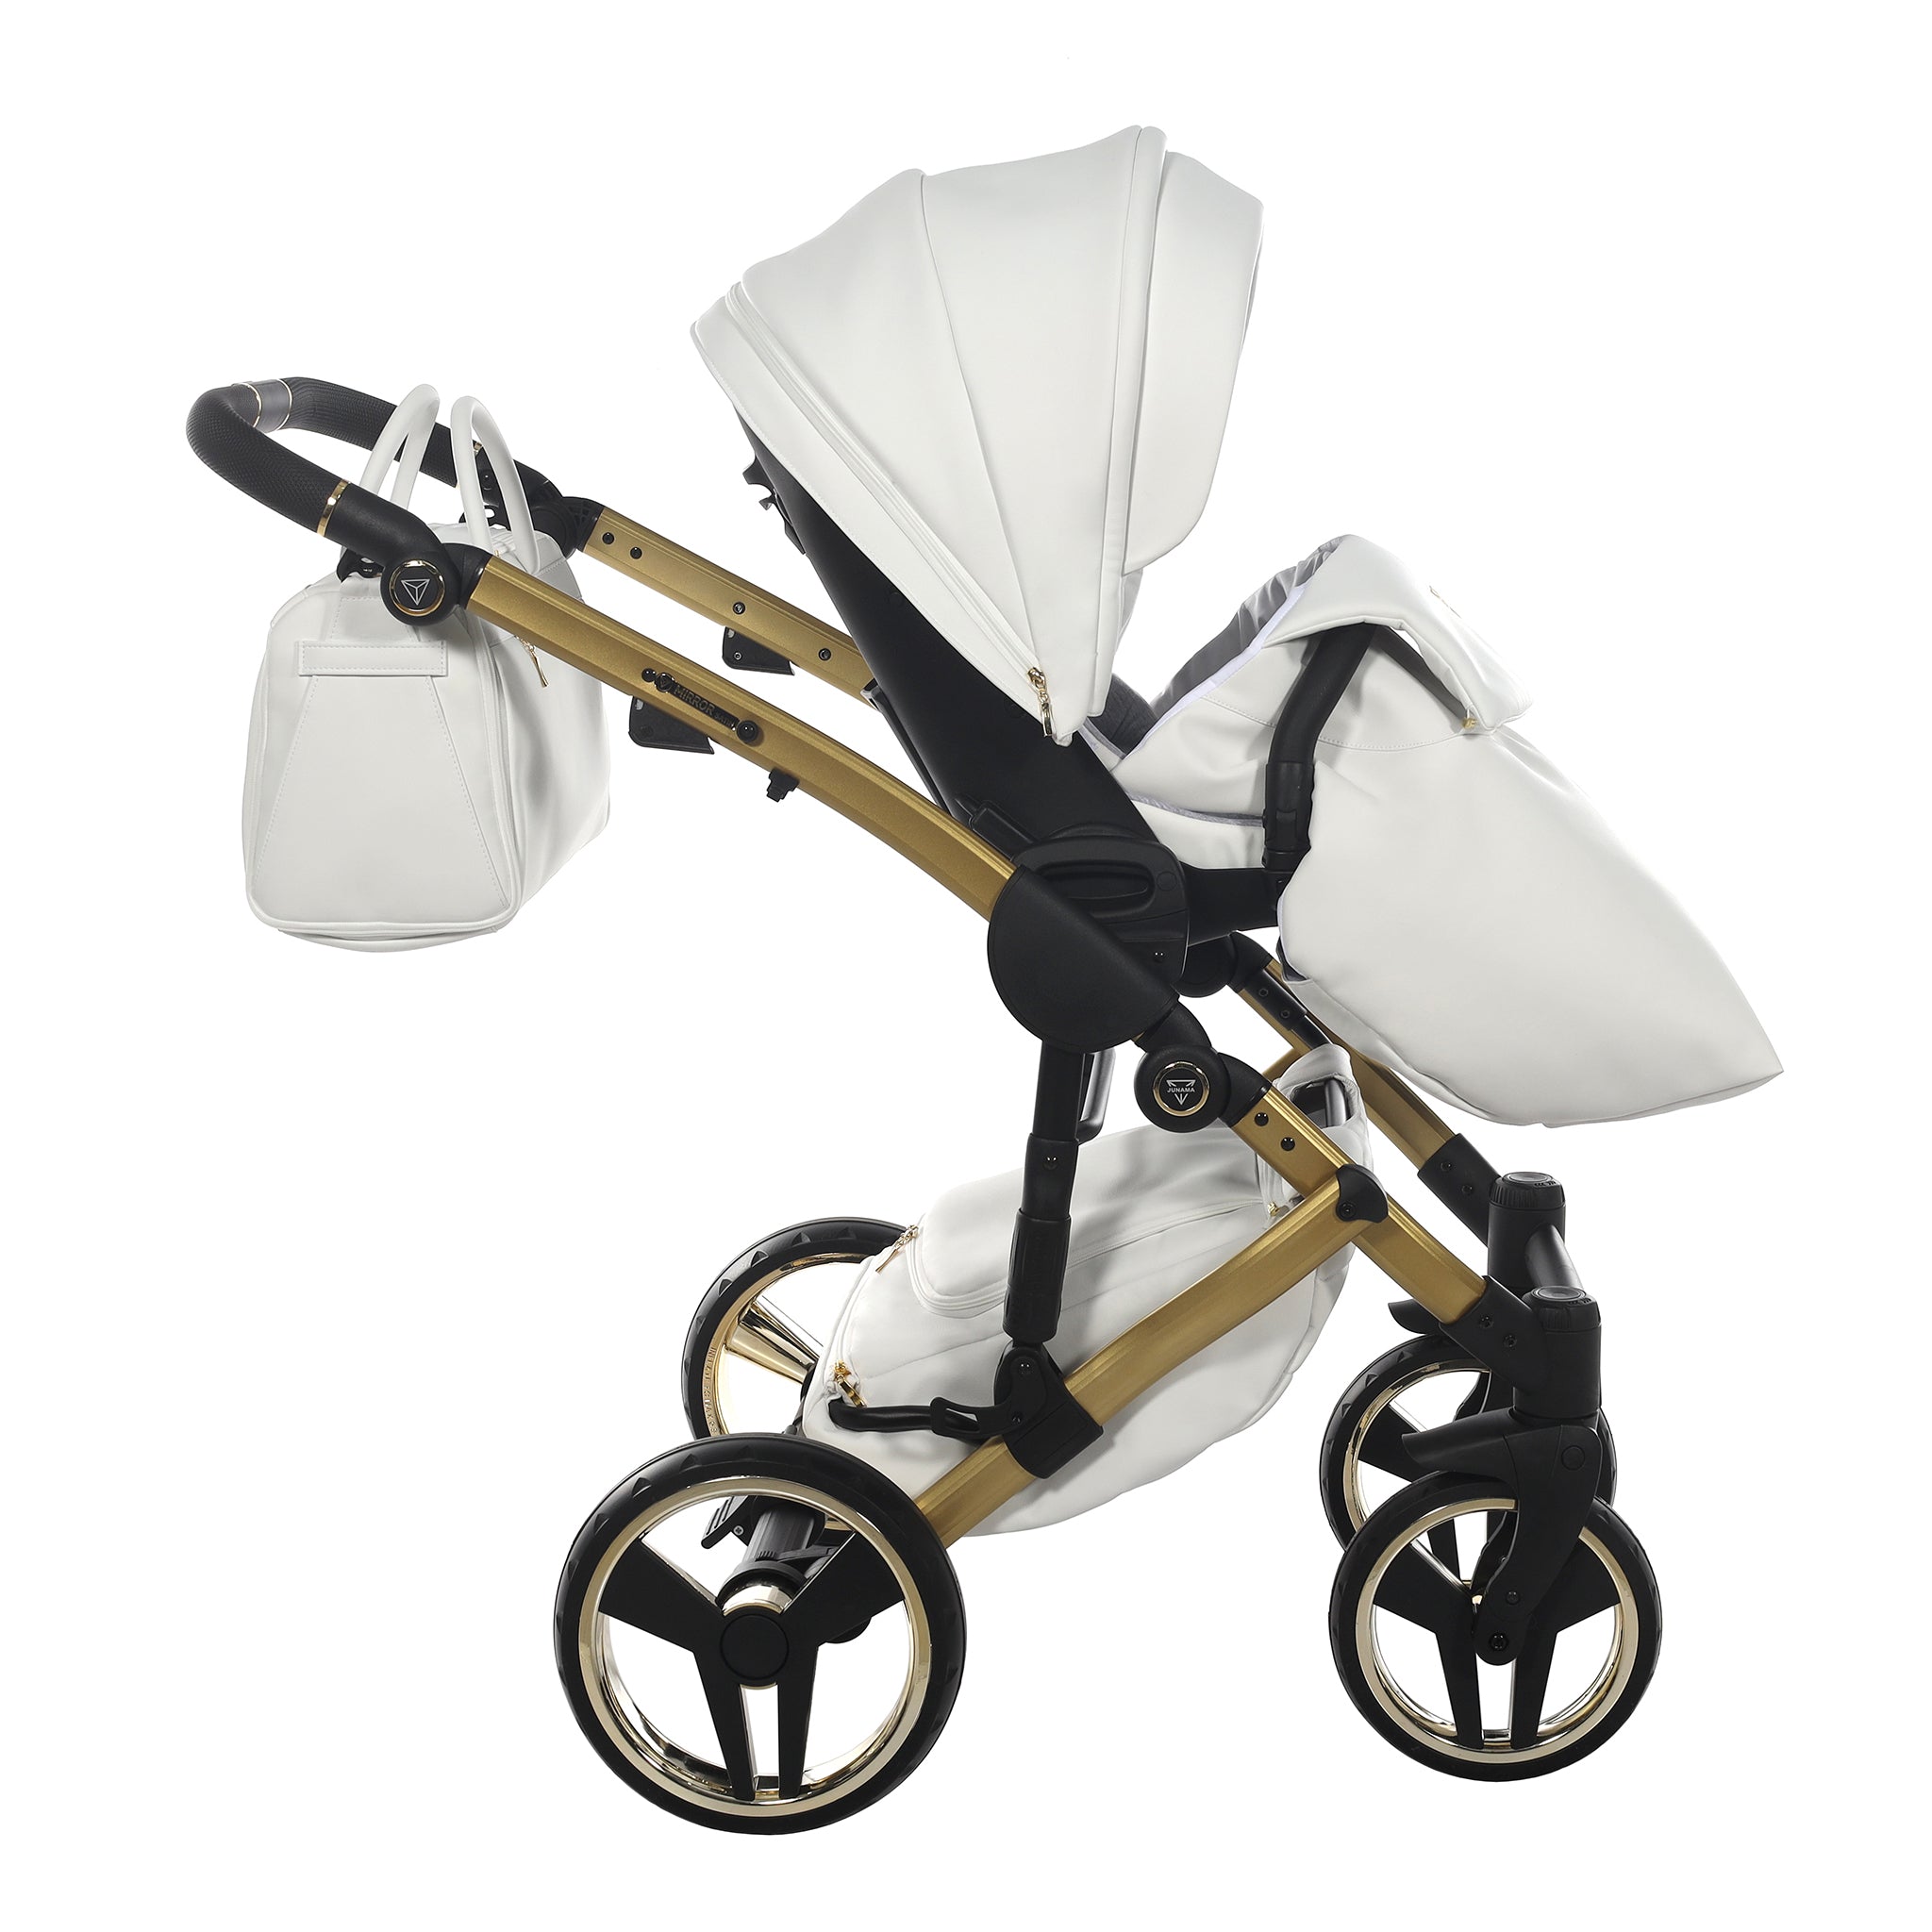 Junama Mirror Satin, baby prams or stroller 2 in 1 - Gold, Code number: JUNMSAT06